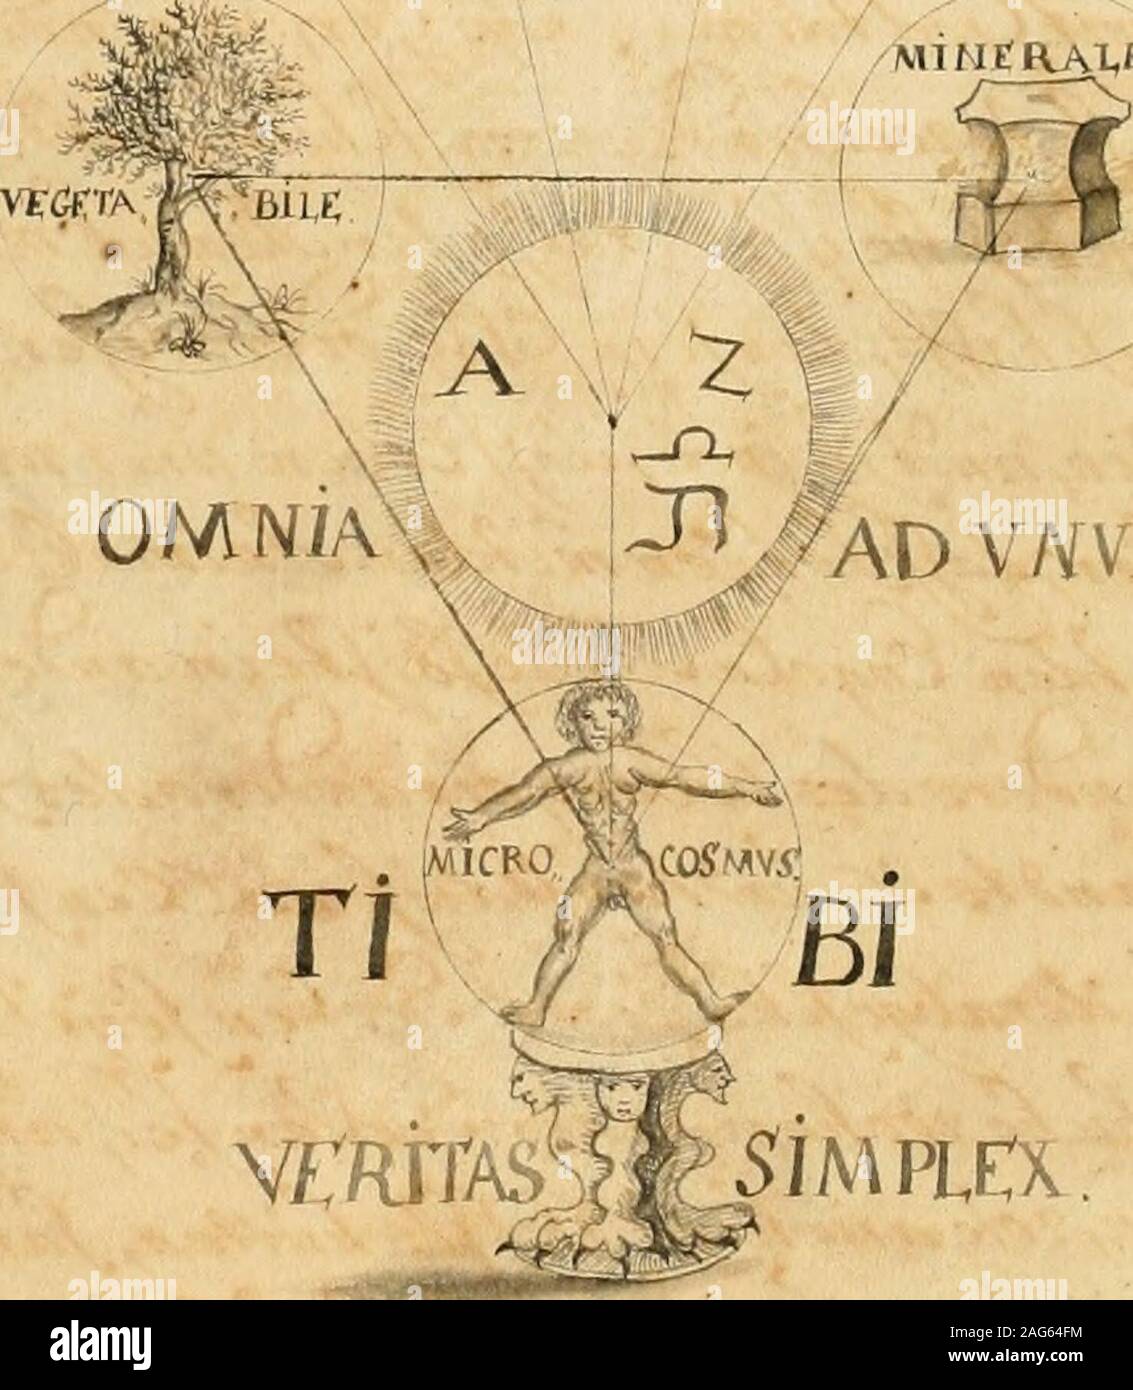 . Manly Palmer Hall collection de manuscrits alchimiques, 1500-1825. AB VNO &gt ; 4 GArjj YltR AaVAVXAER^/AAy. MlHeiAXF y AD V/VVM. vrRrrAS5Si(L^iM pia. 2^2., £/&gt;C. Banque D'Images